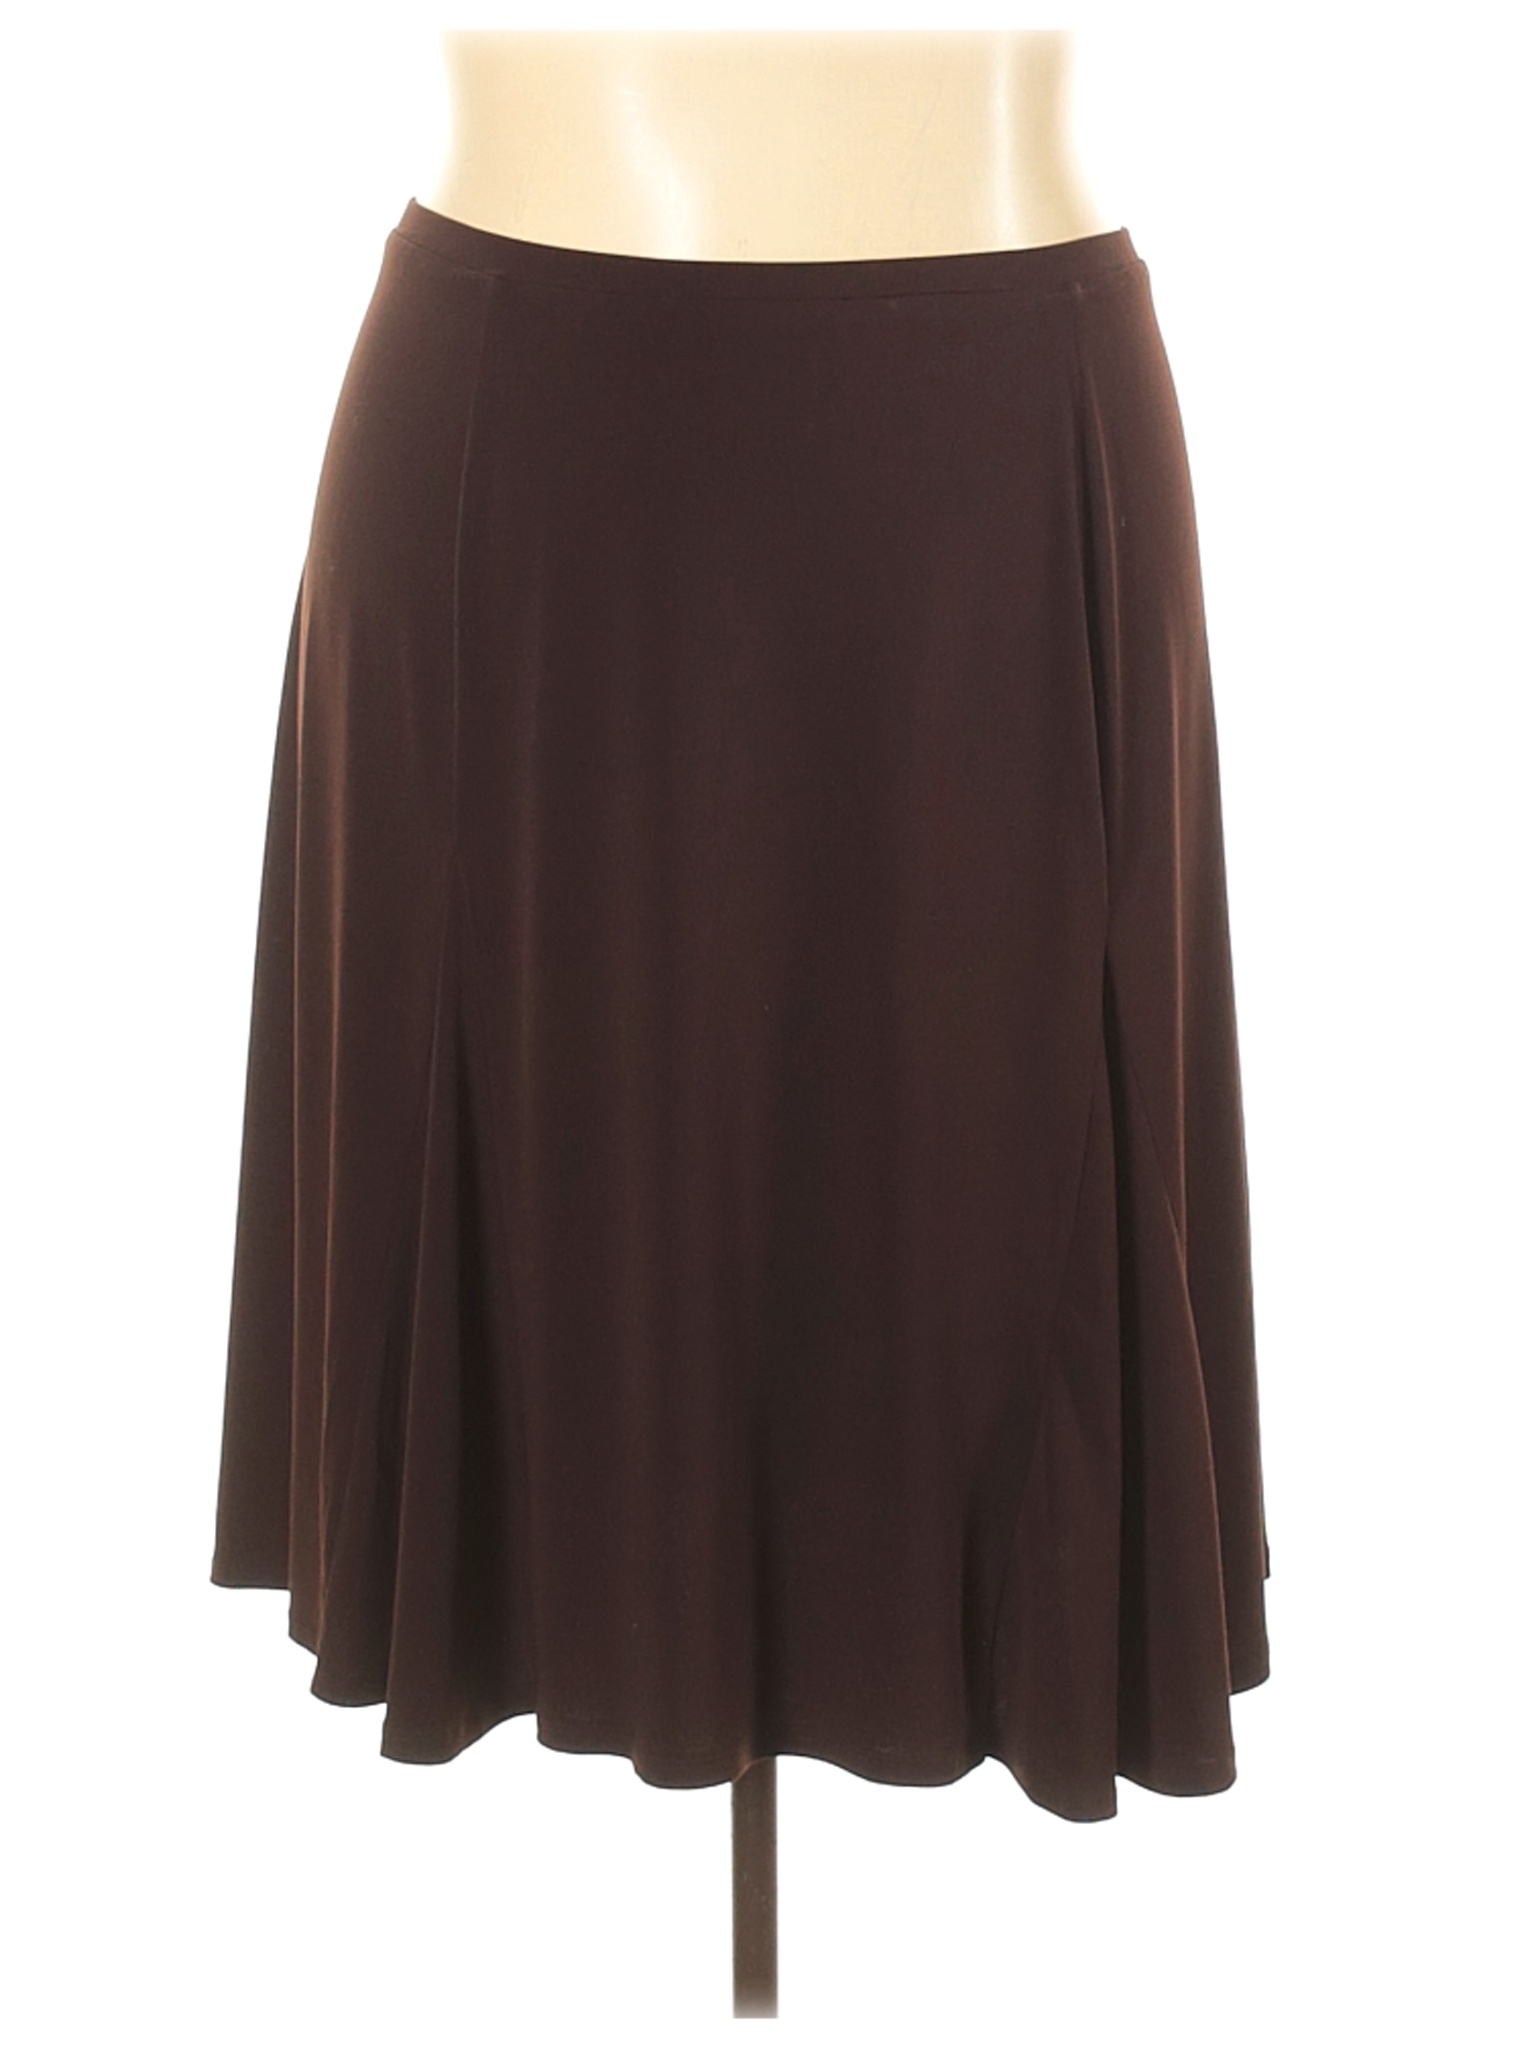 Assorted Brands Women Brown Casual Skirt 18 Plus | eBay